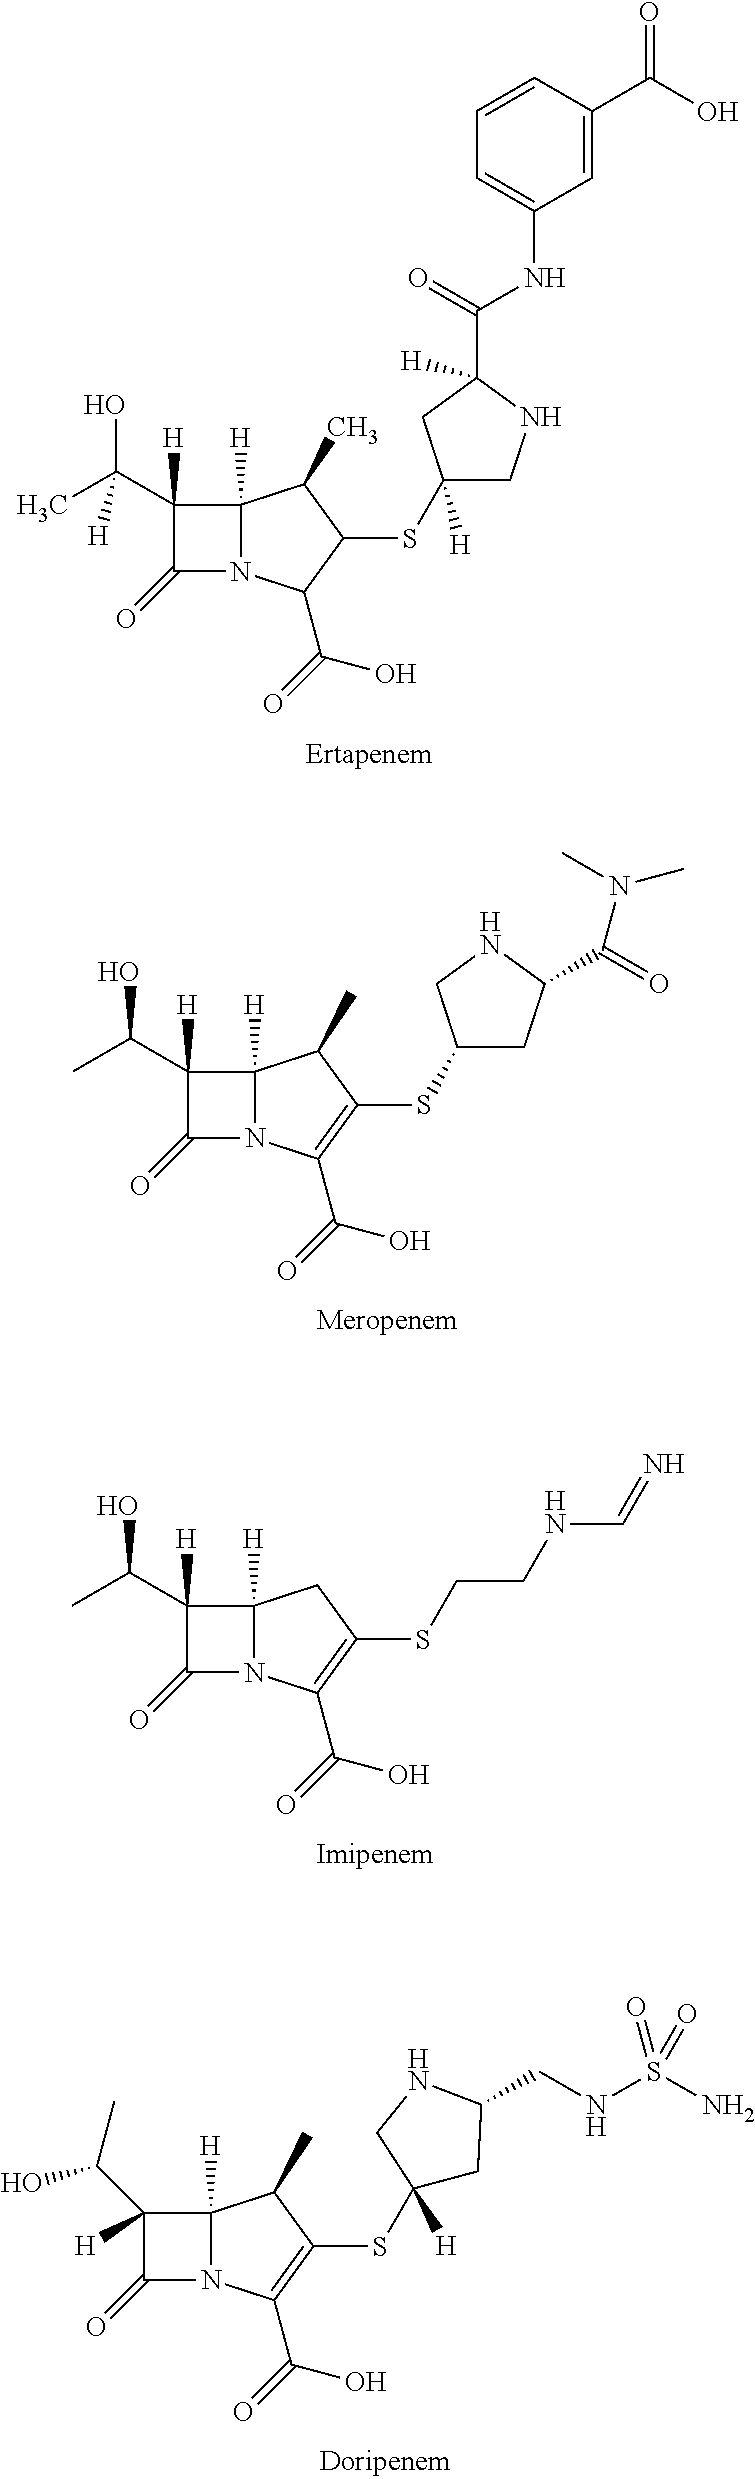 Avibactam and carbapenems antibacterial agents